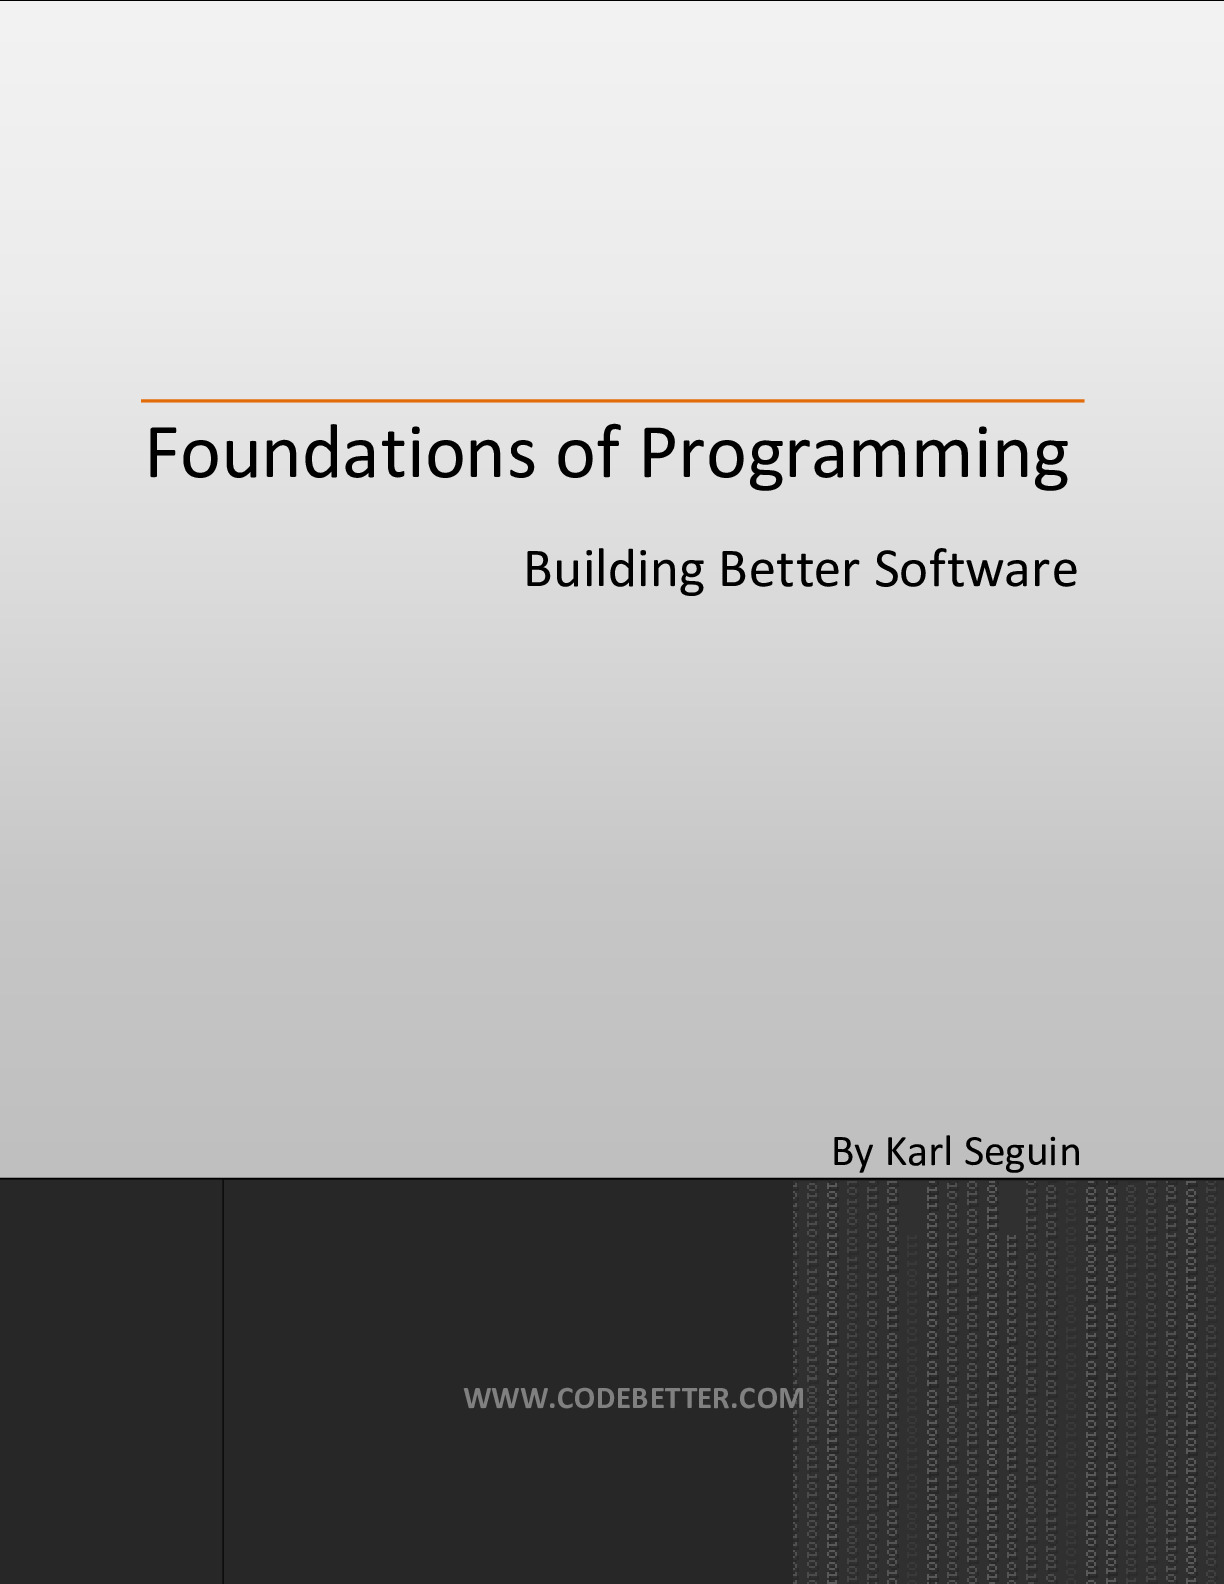 FoundationsOfProgramming